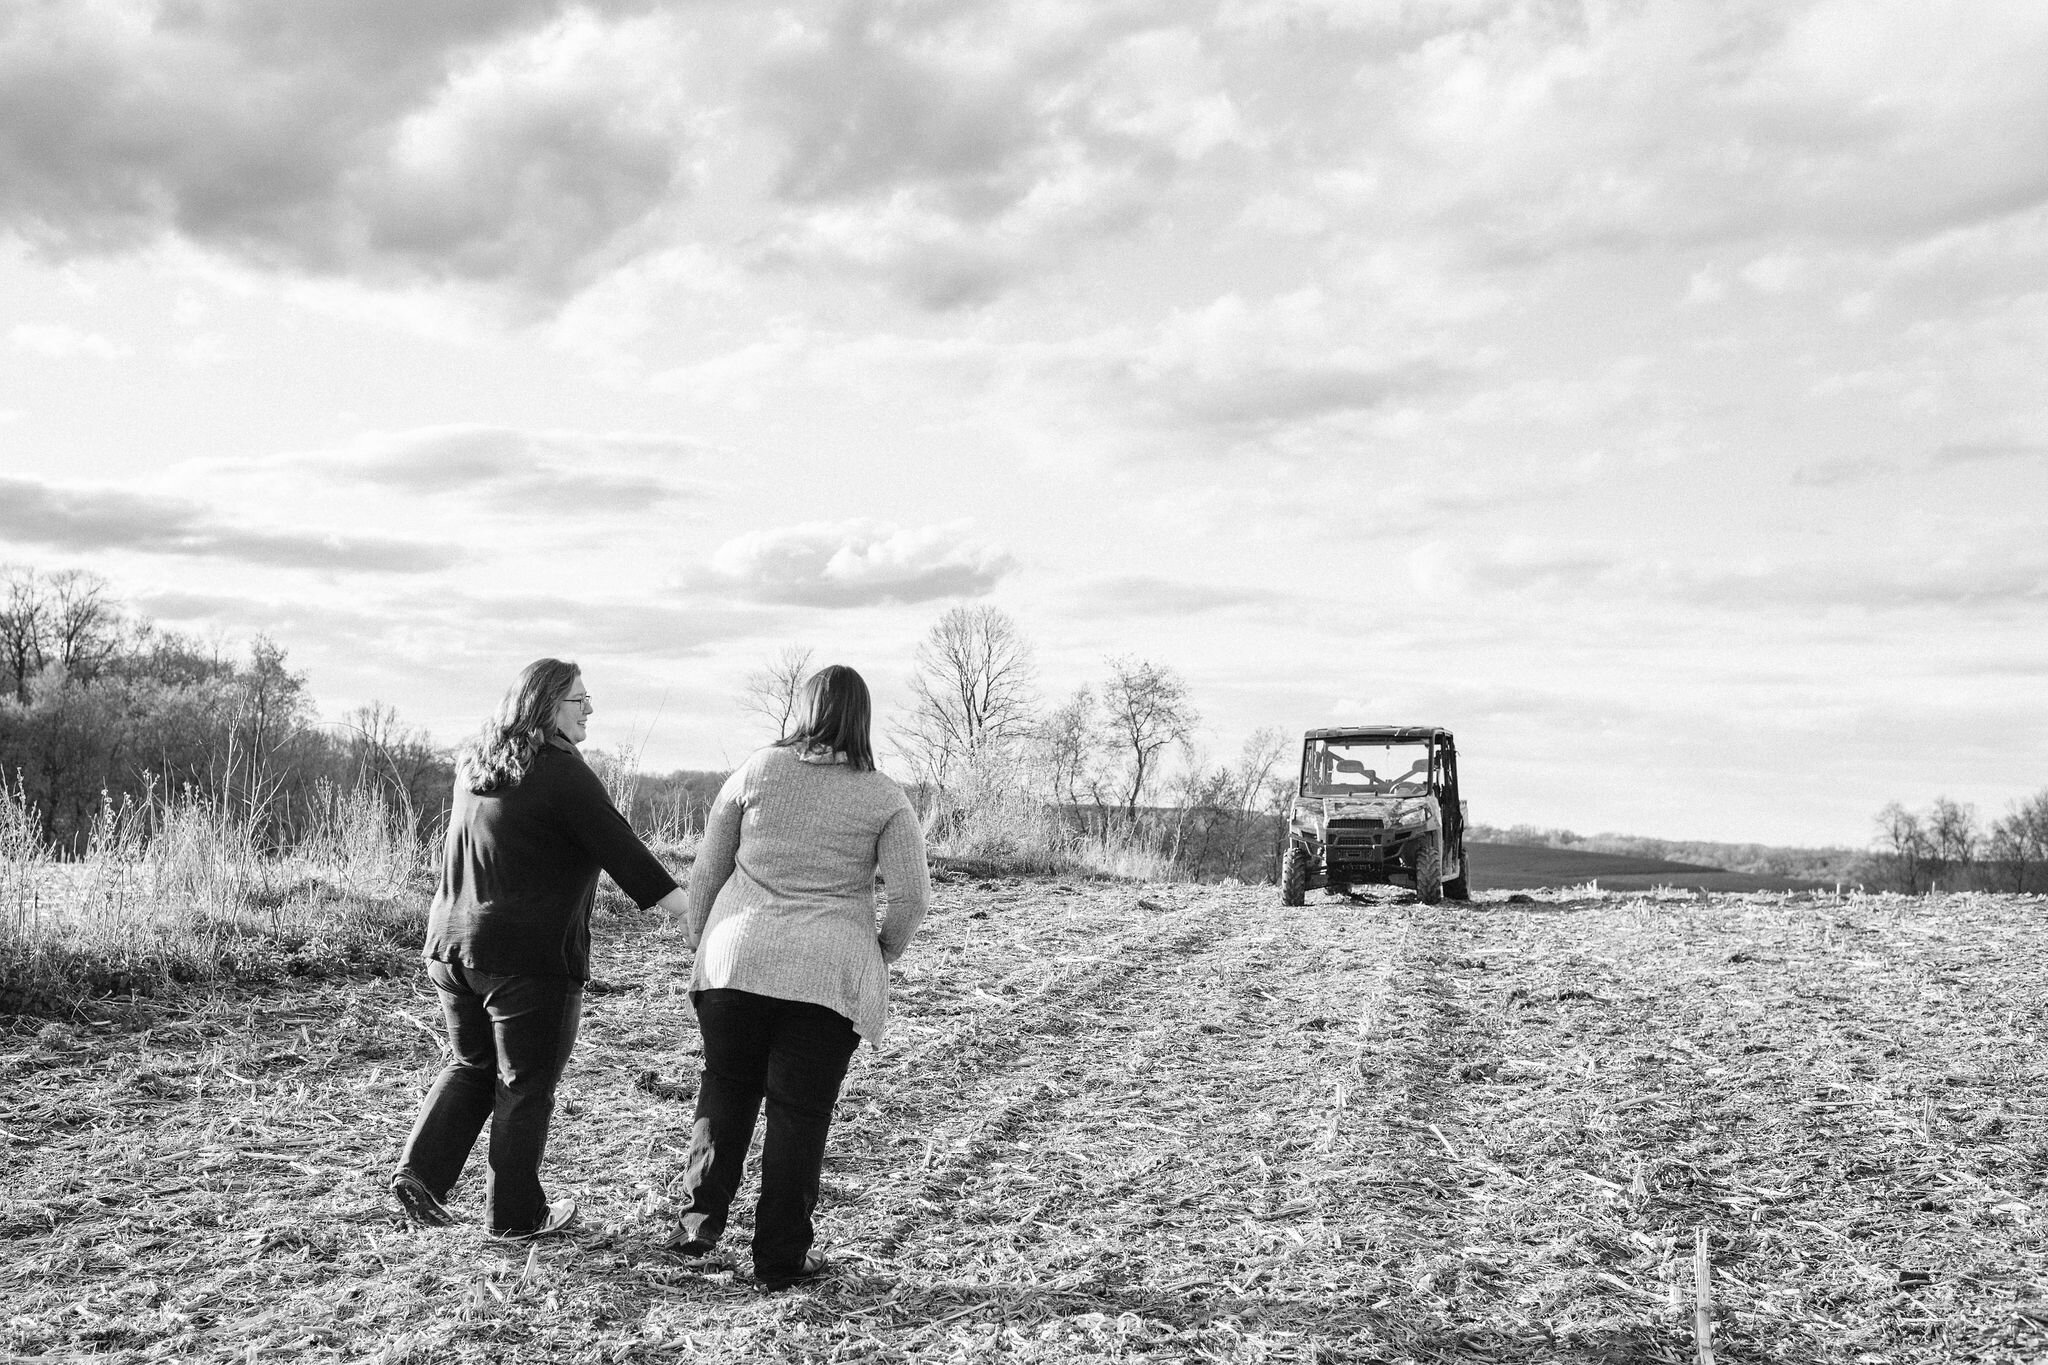 Women walking toward a tractor